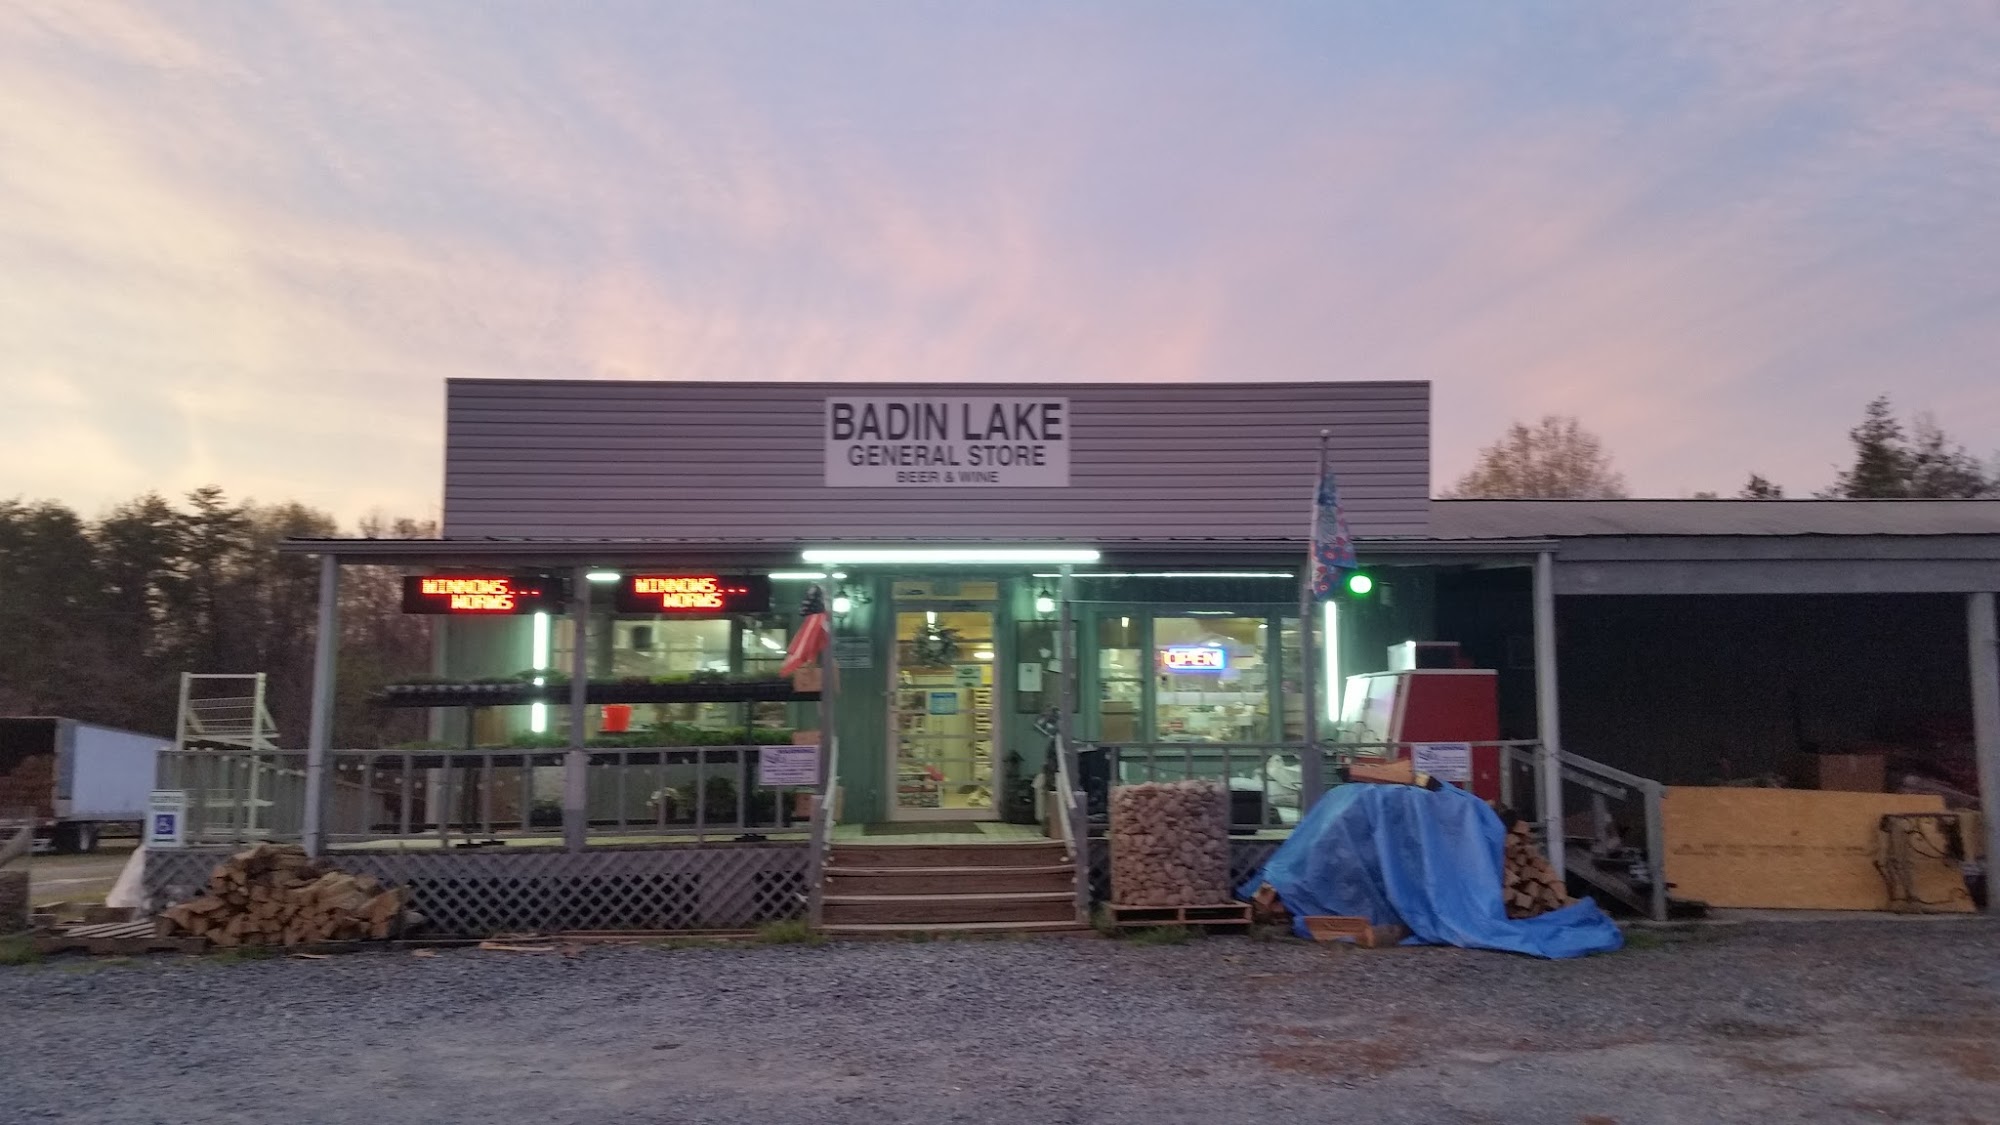 Badin Lake General Store